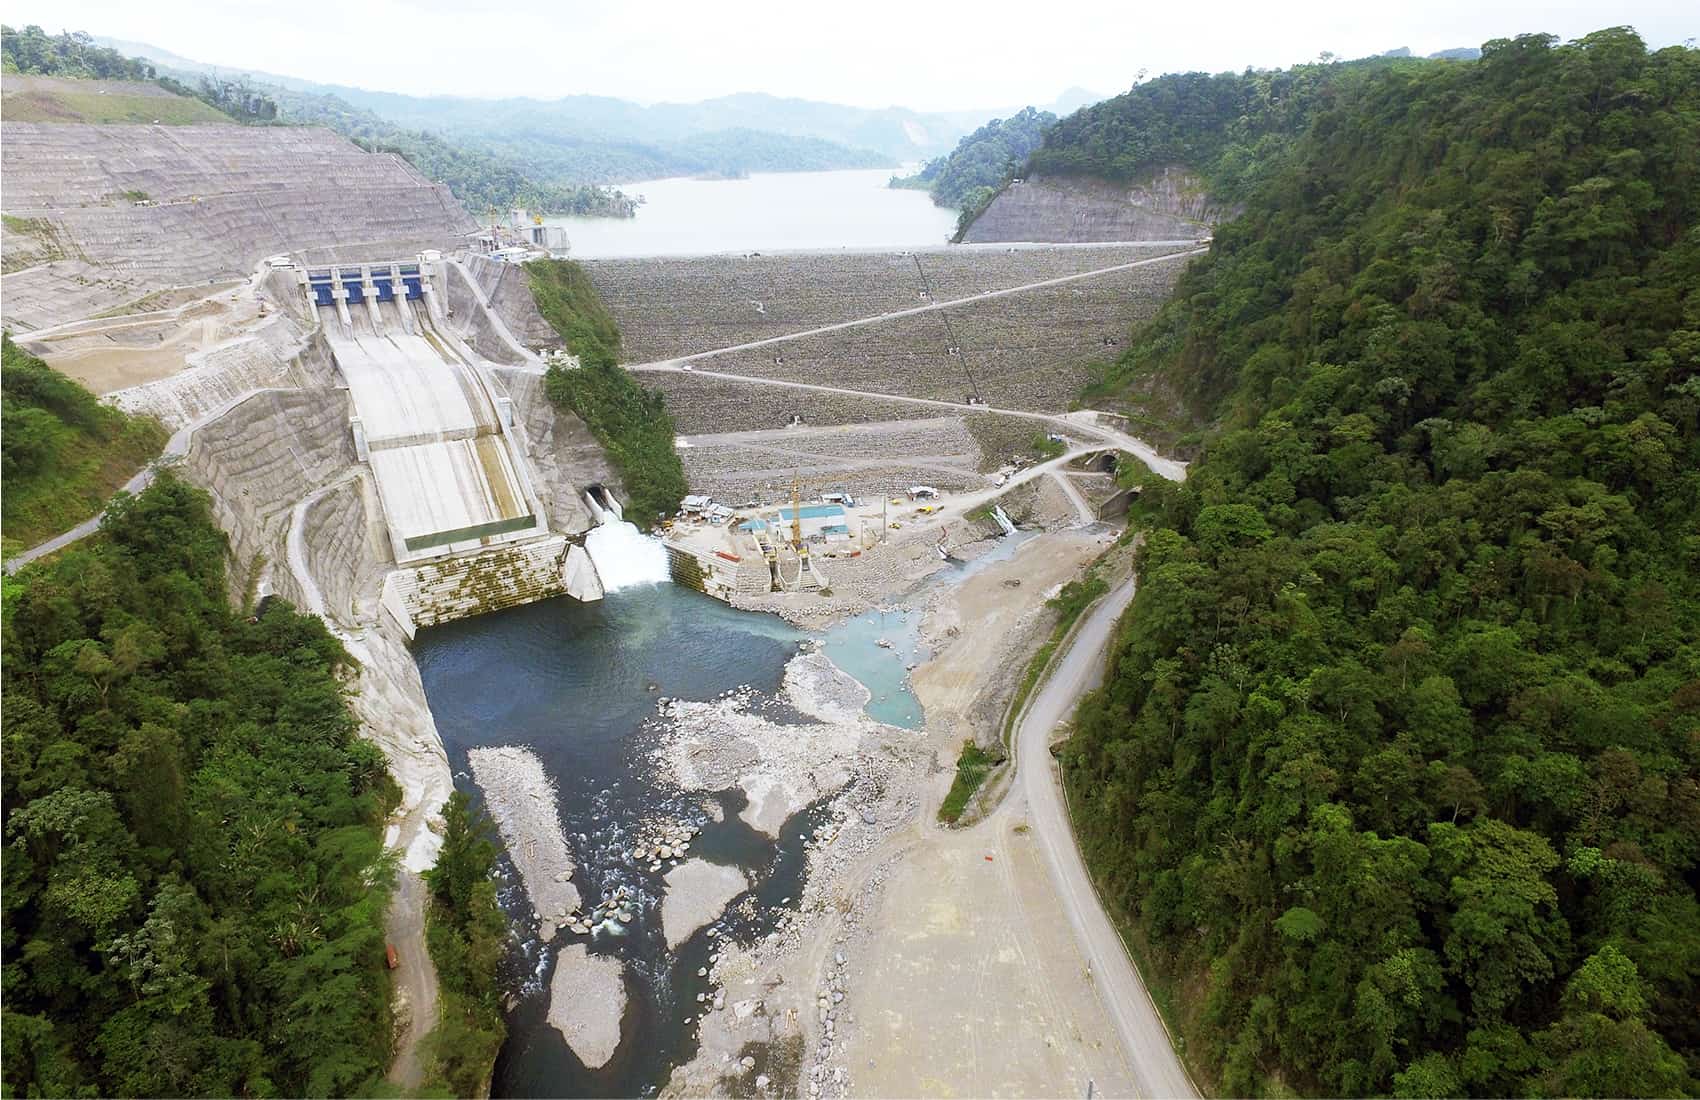 Reventazón hydroelectric plant